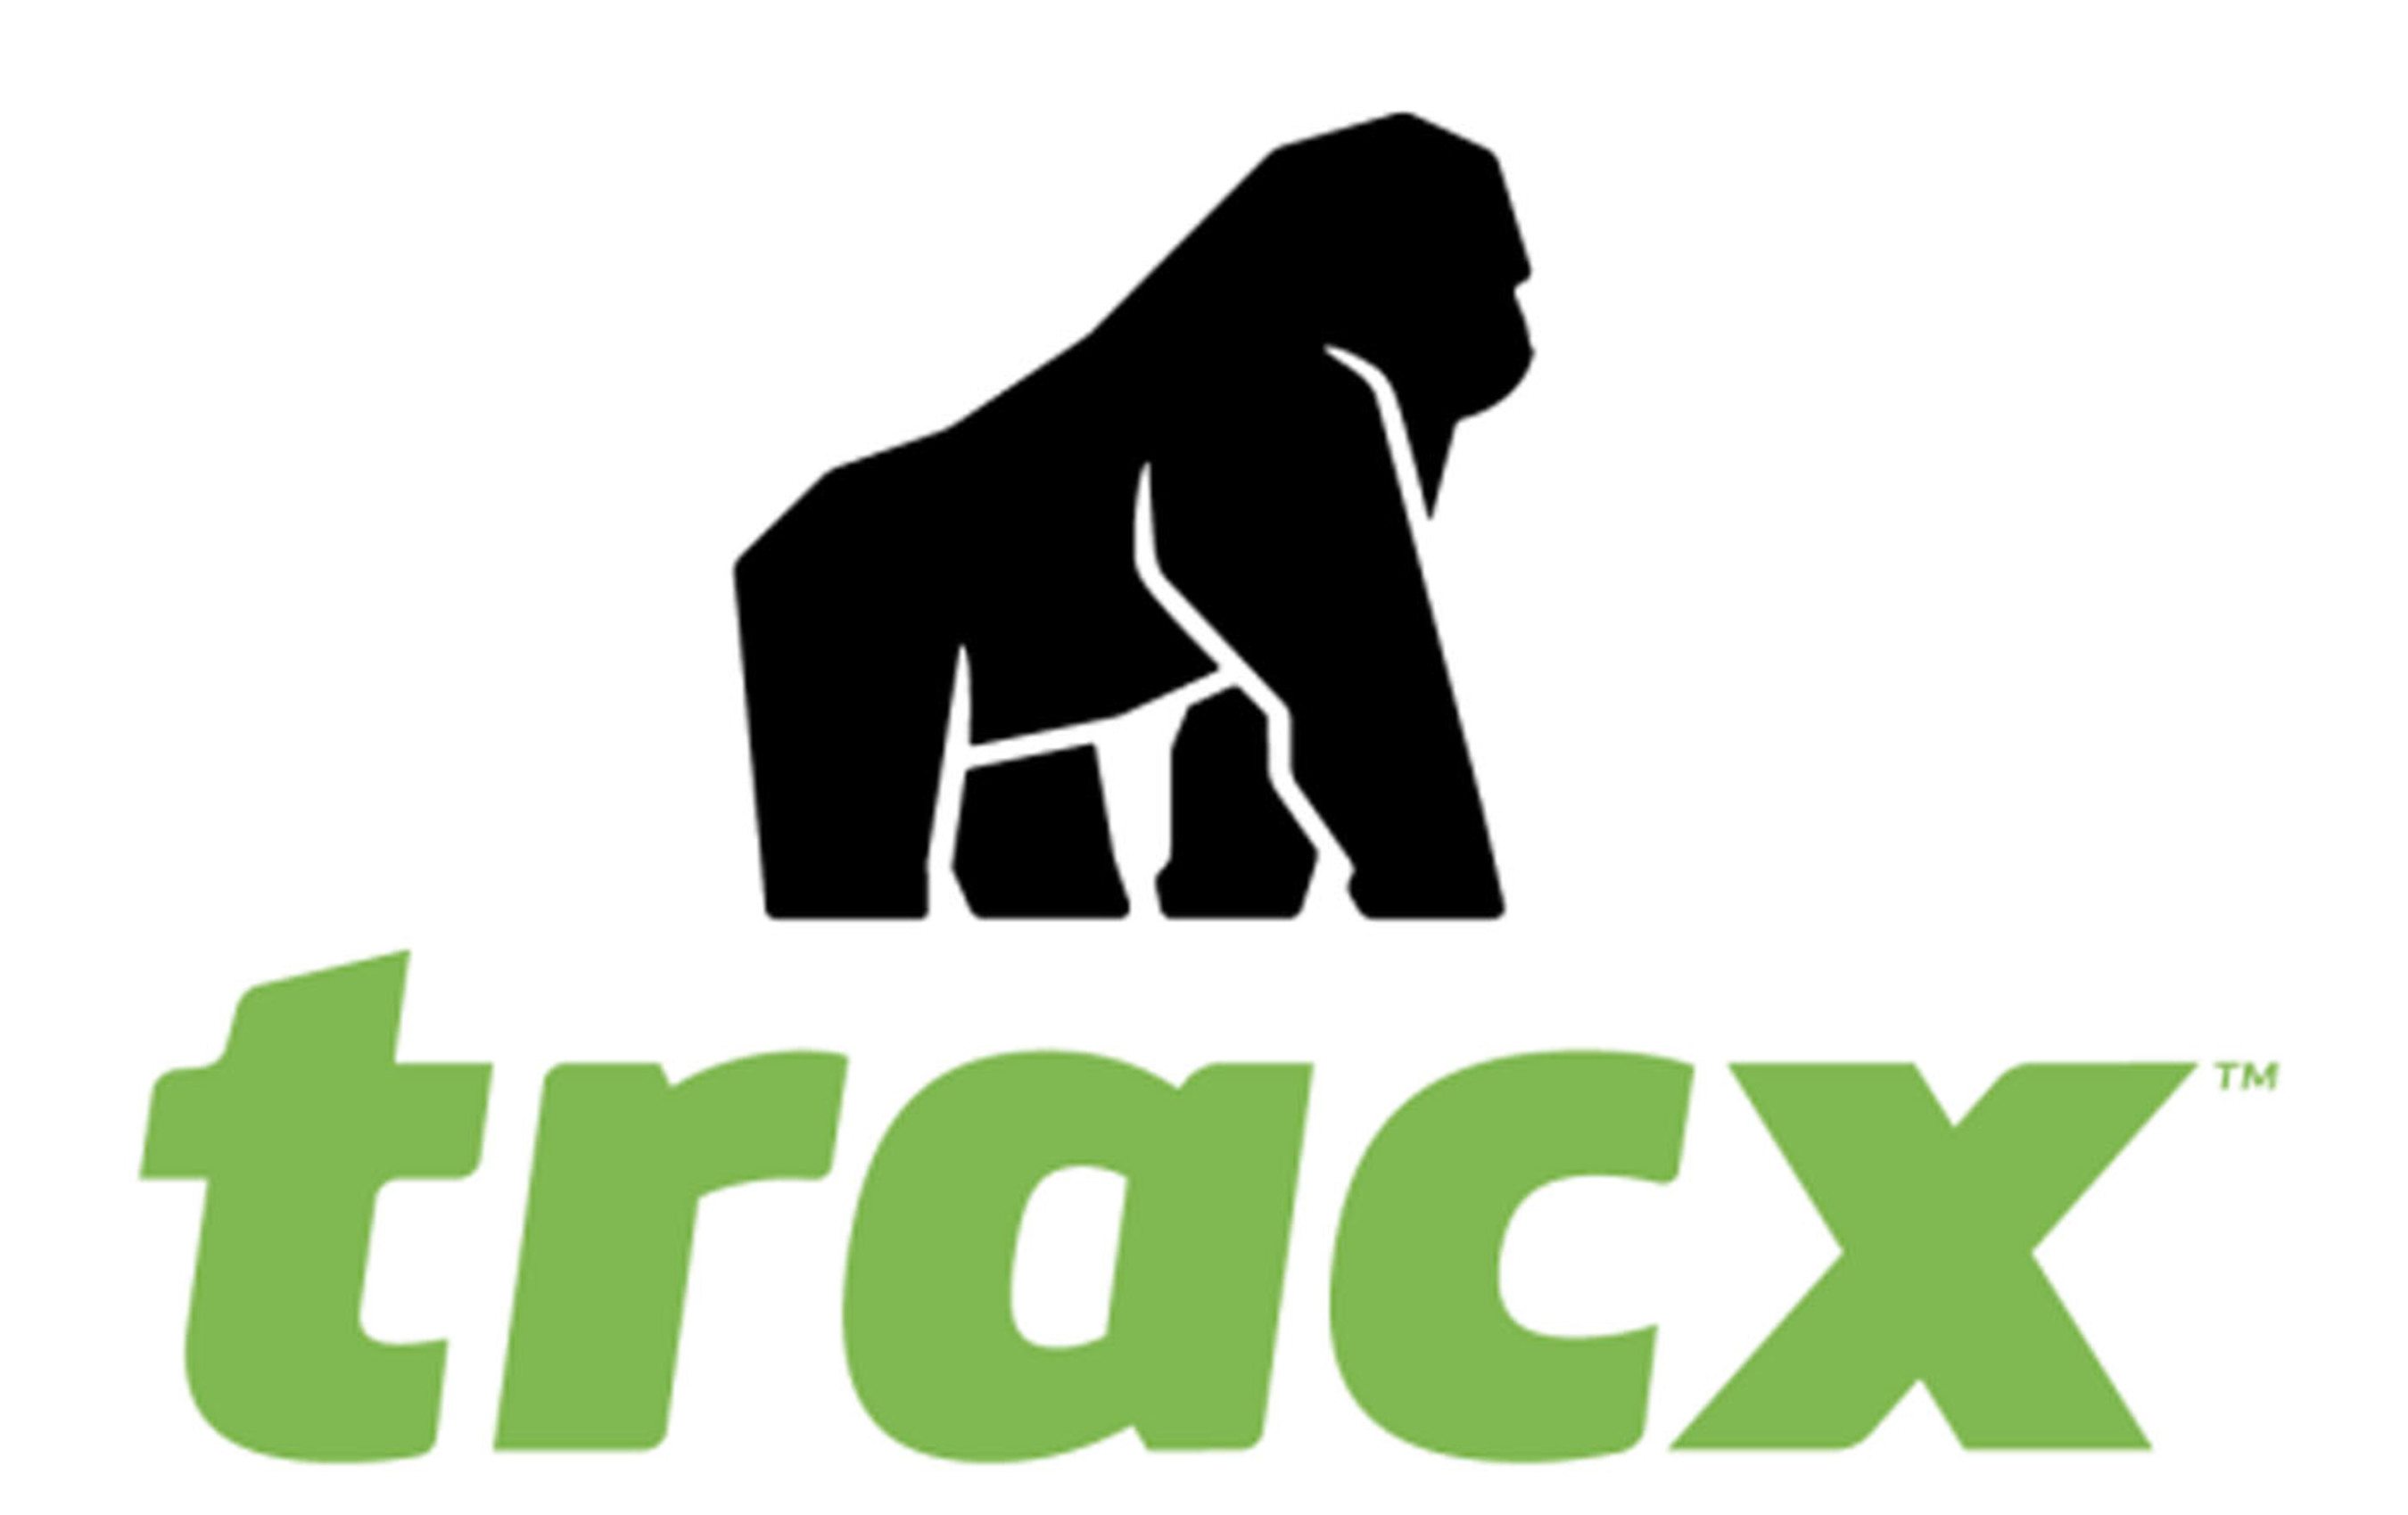 Tracx logo. (PRNewsFoto/Tracx) (PRNewsFoto/)